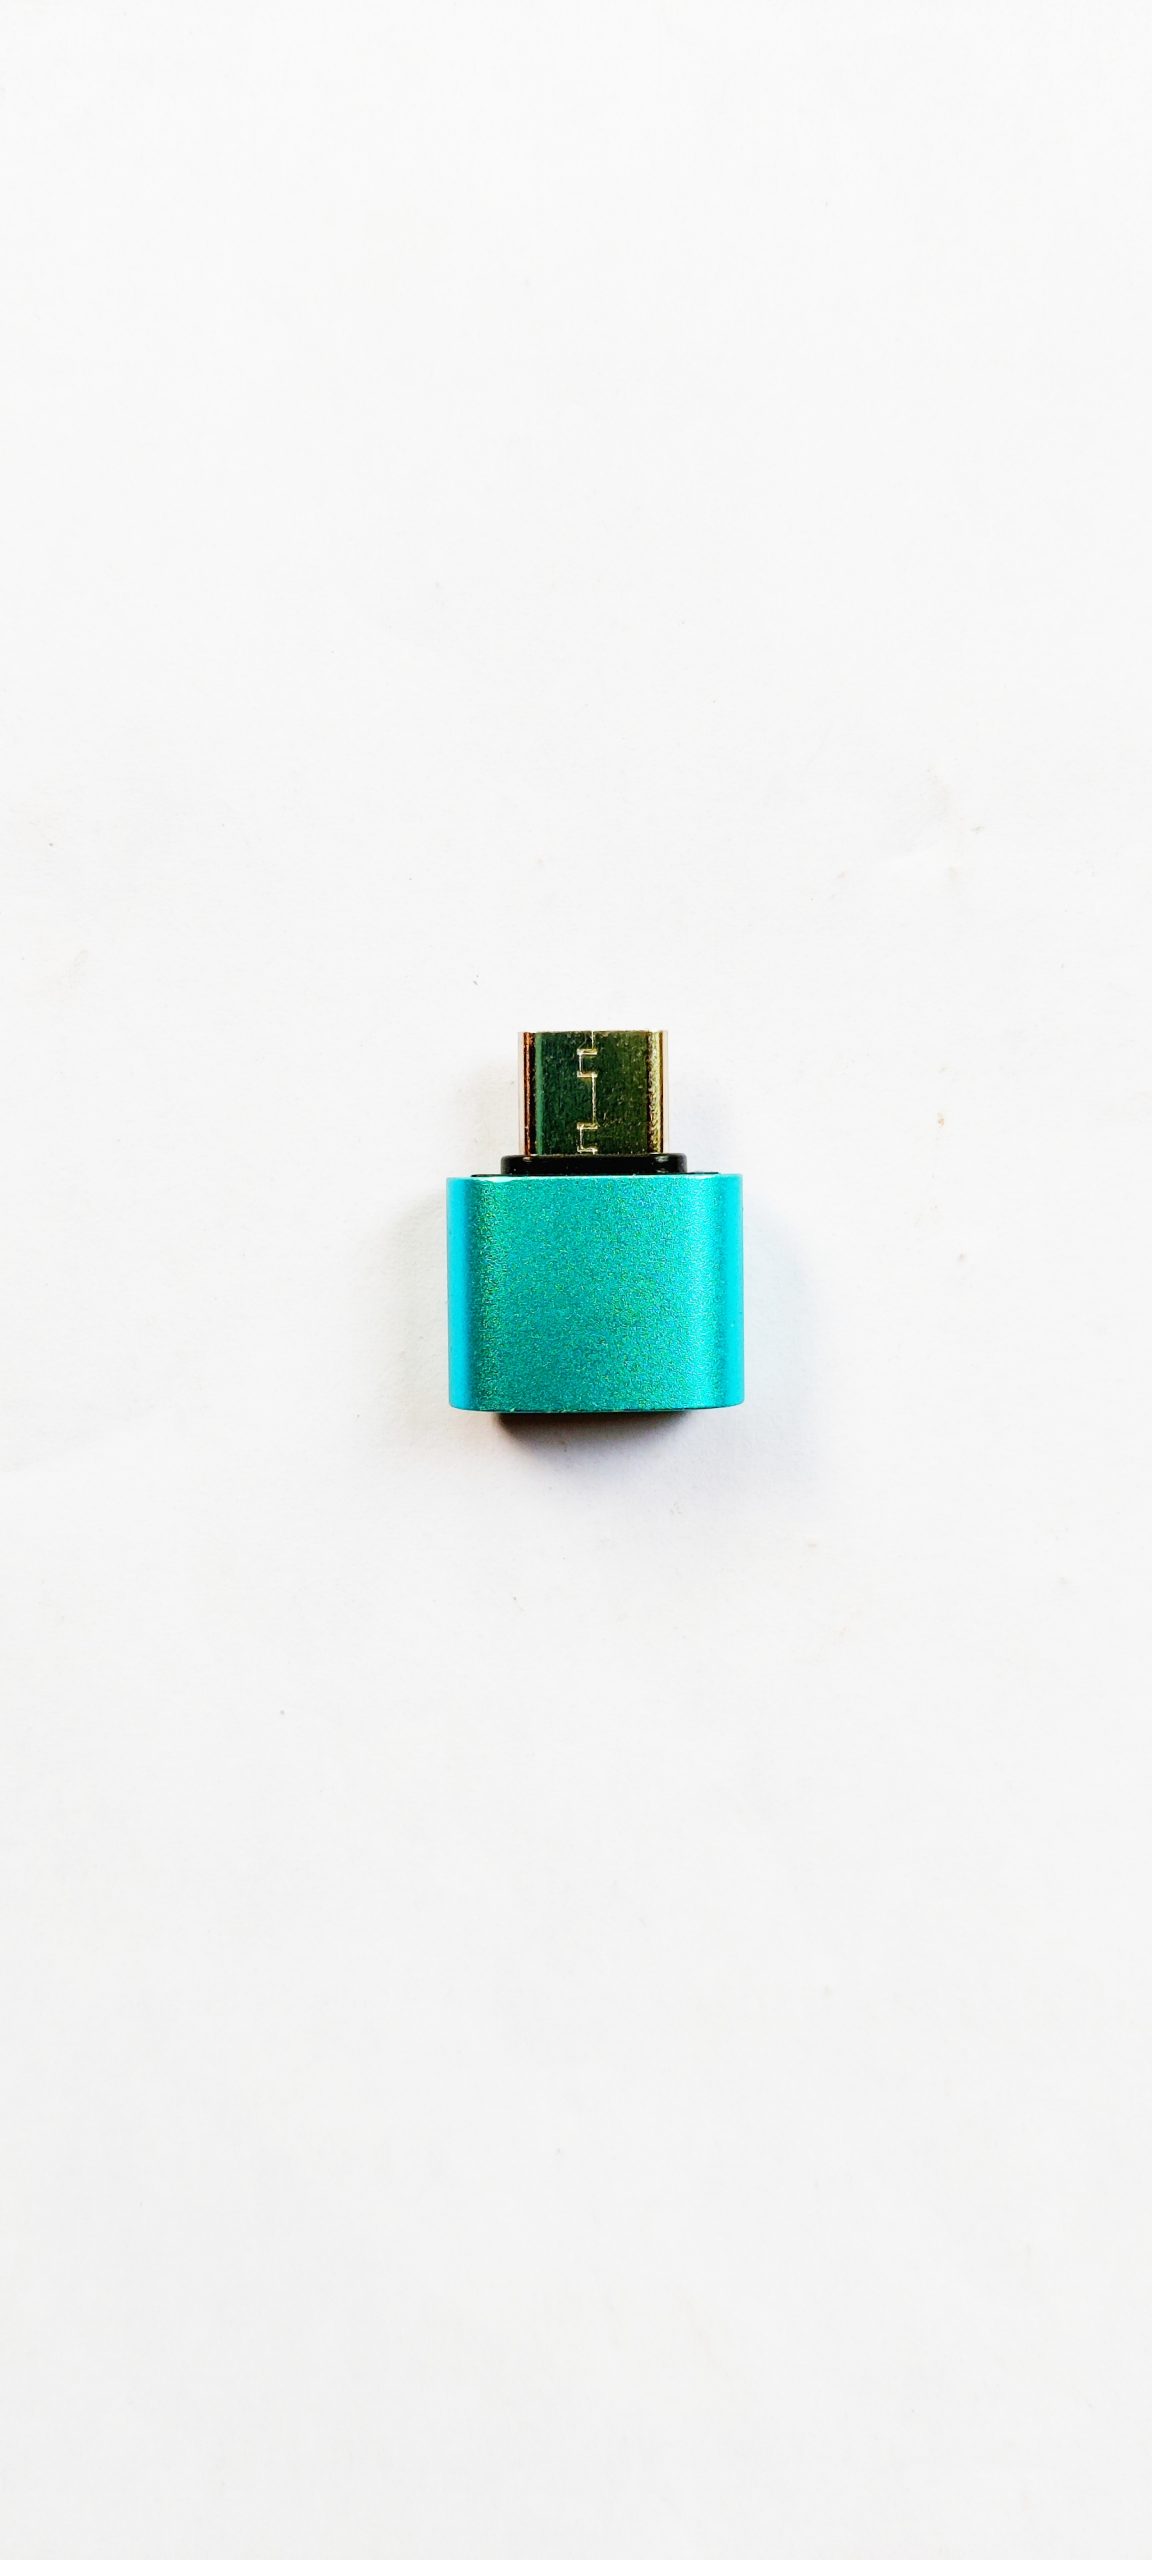 USB convertor